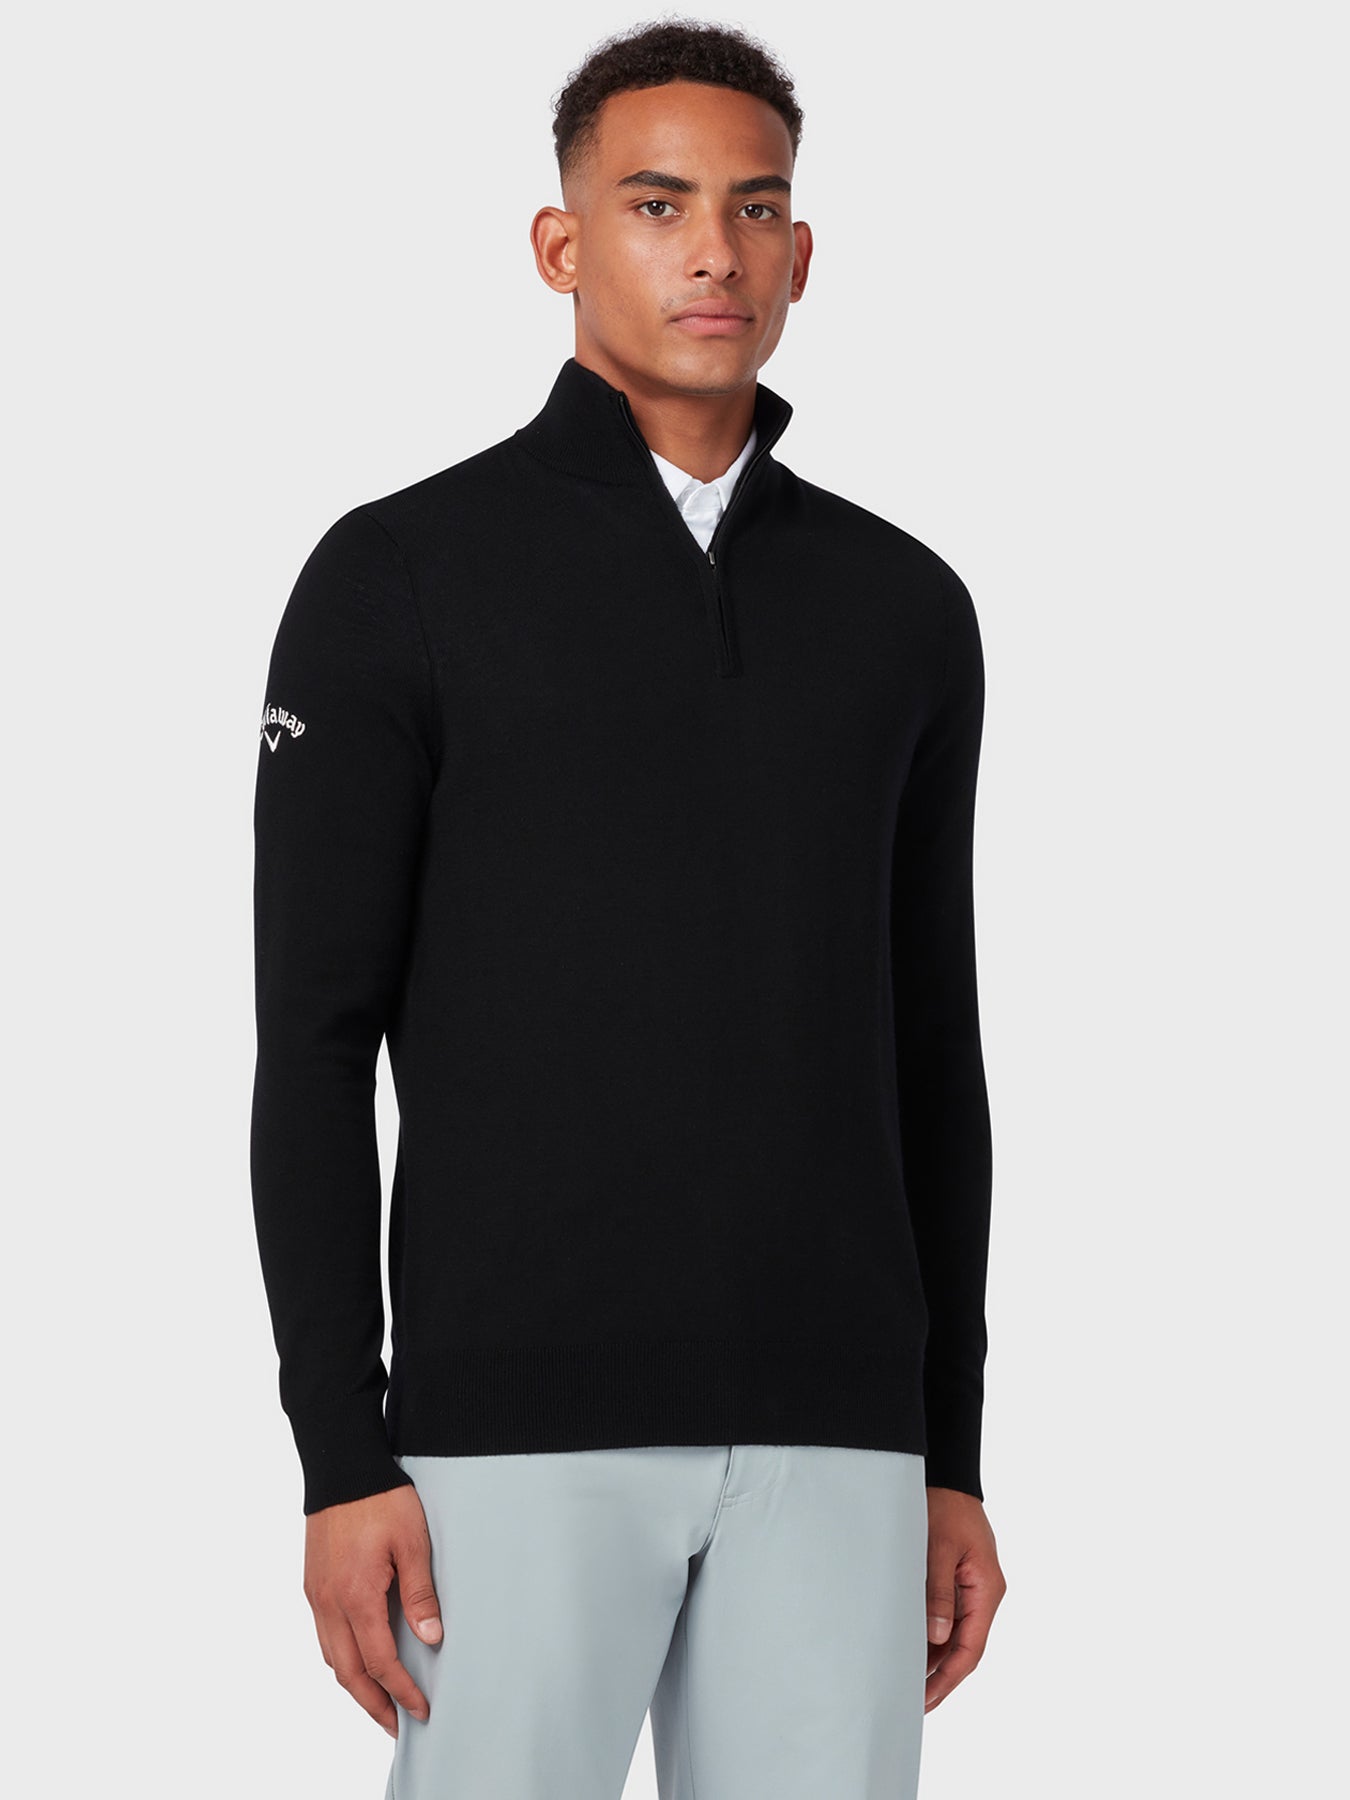 View Thermal Merino Wool Quarter Zip Sweater In Black Onyx Black Onyx XXL information